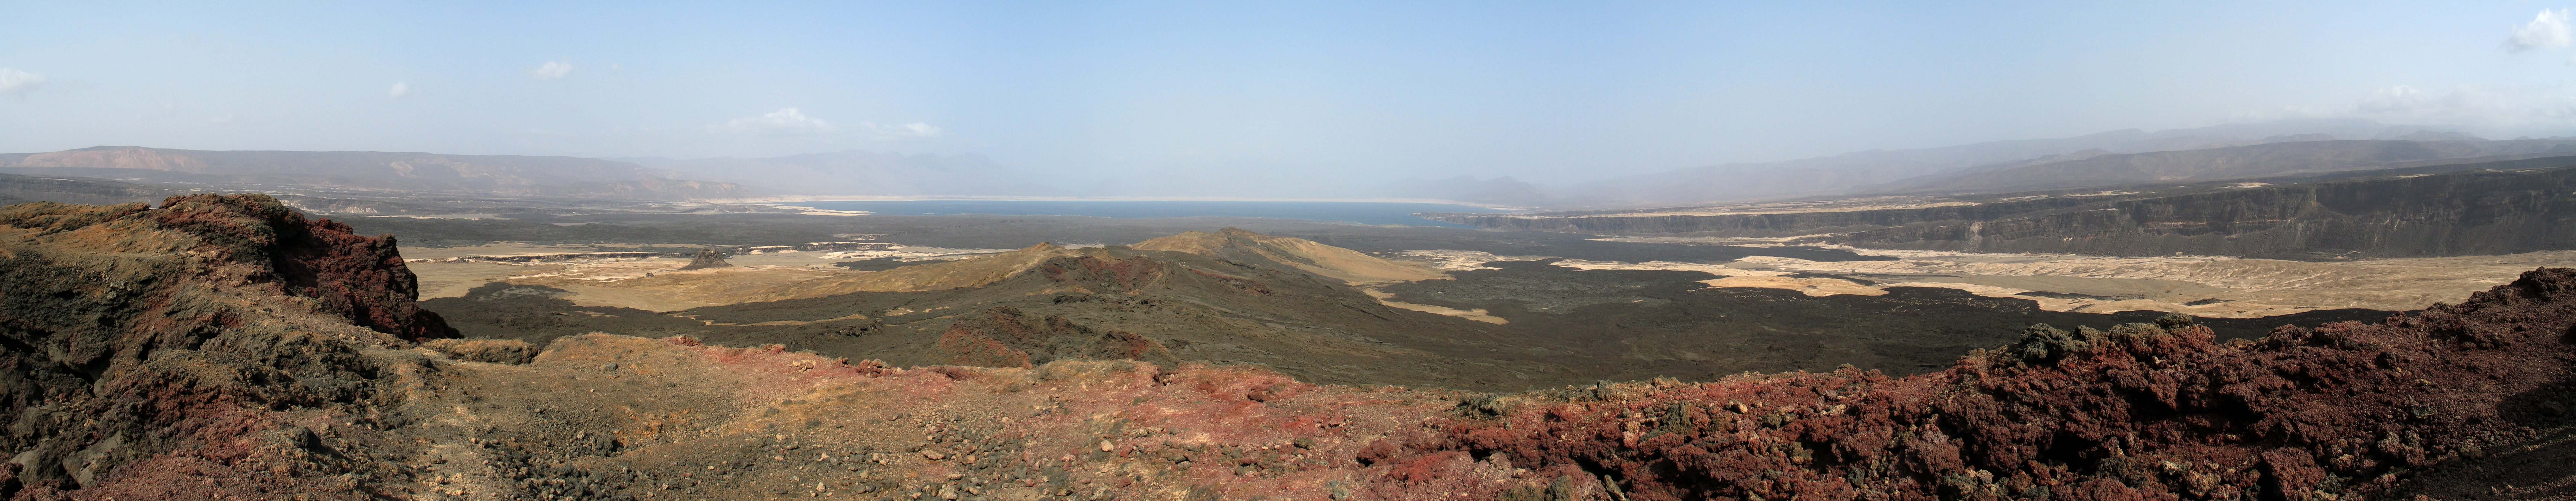 278_7829ff_Ardoukouba-Vulkan-Panorama2.jpg